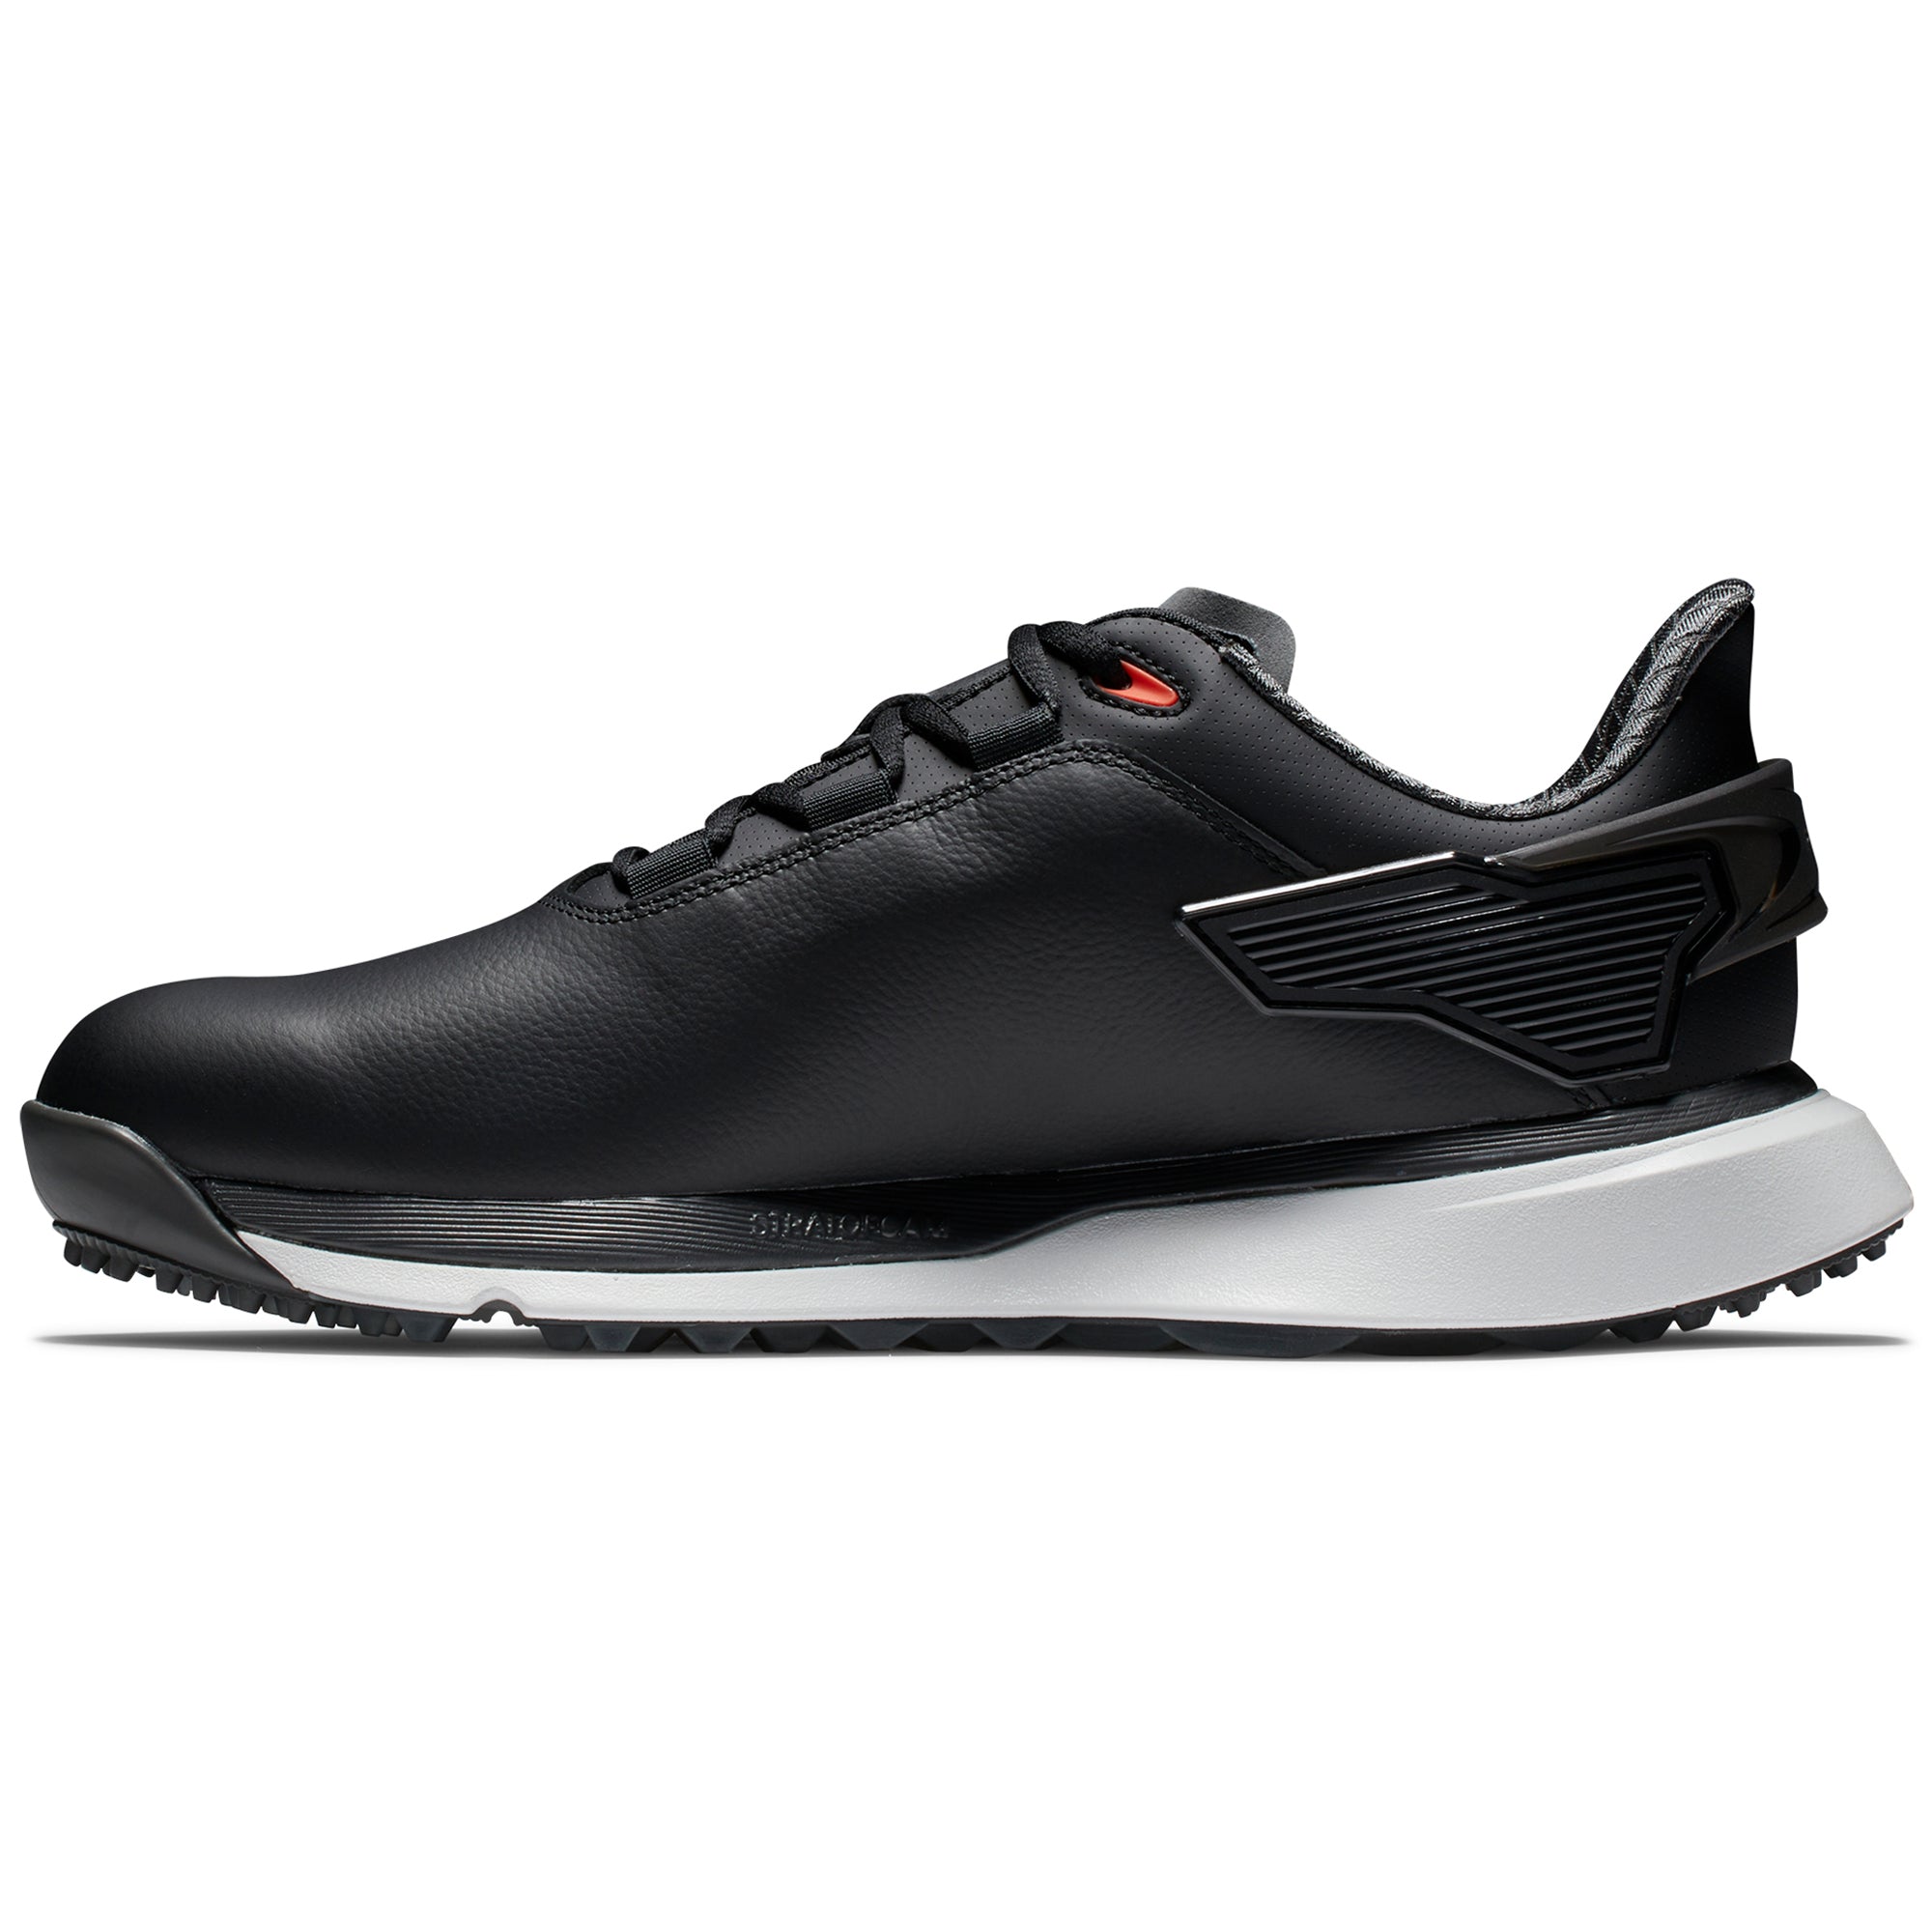 footjoy-pro-slx-golf-shoes-56913-black-white-grey